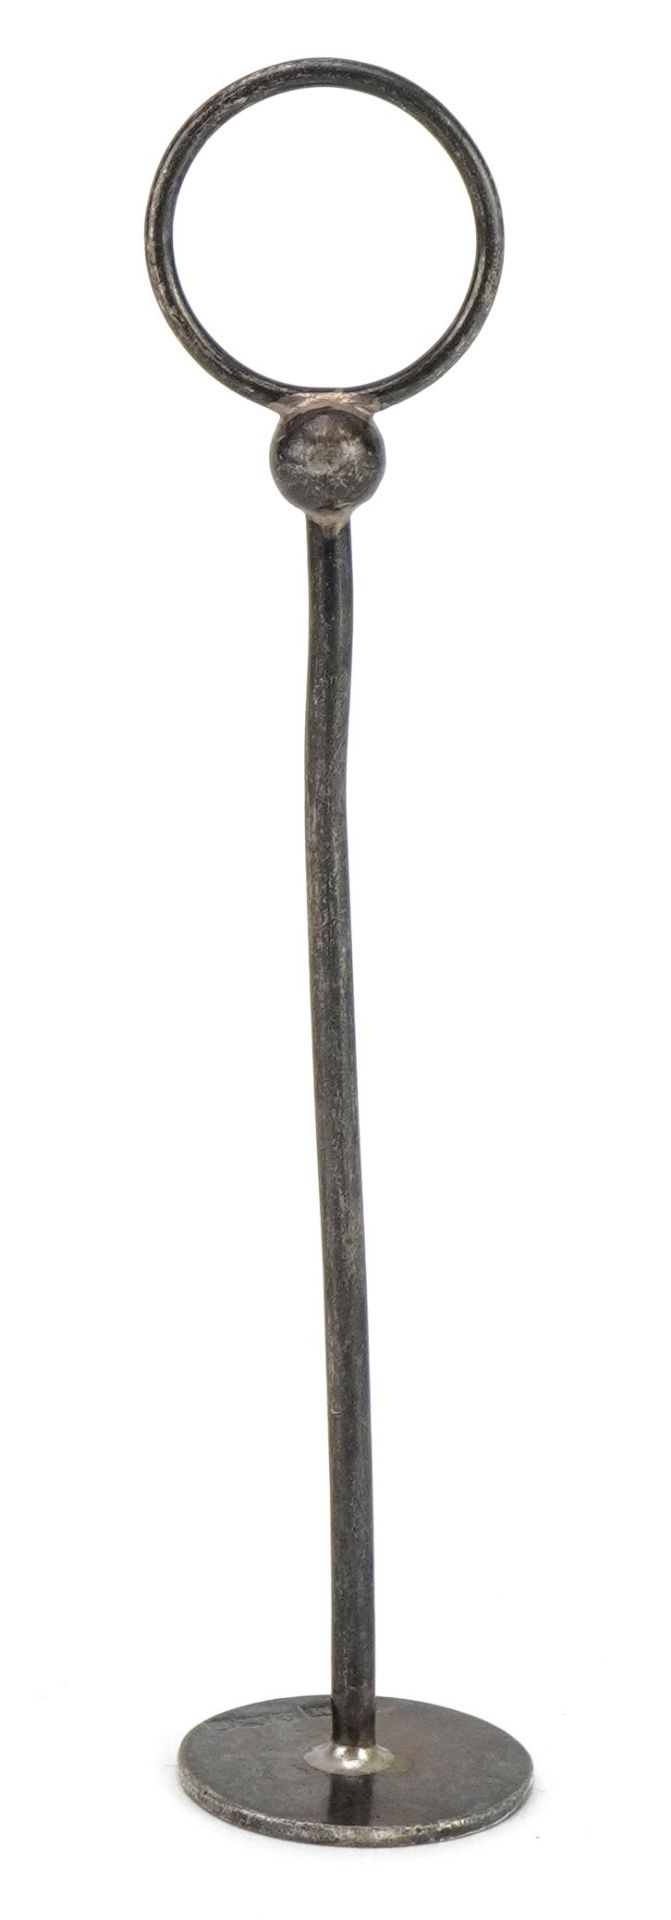 Henry Matthews, Edwardian silver tamper, Birmingham 1906, 11.5cm high, 13.8g - Image 2 of 4